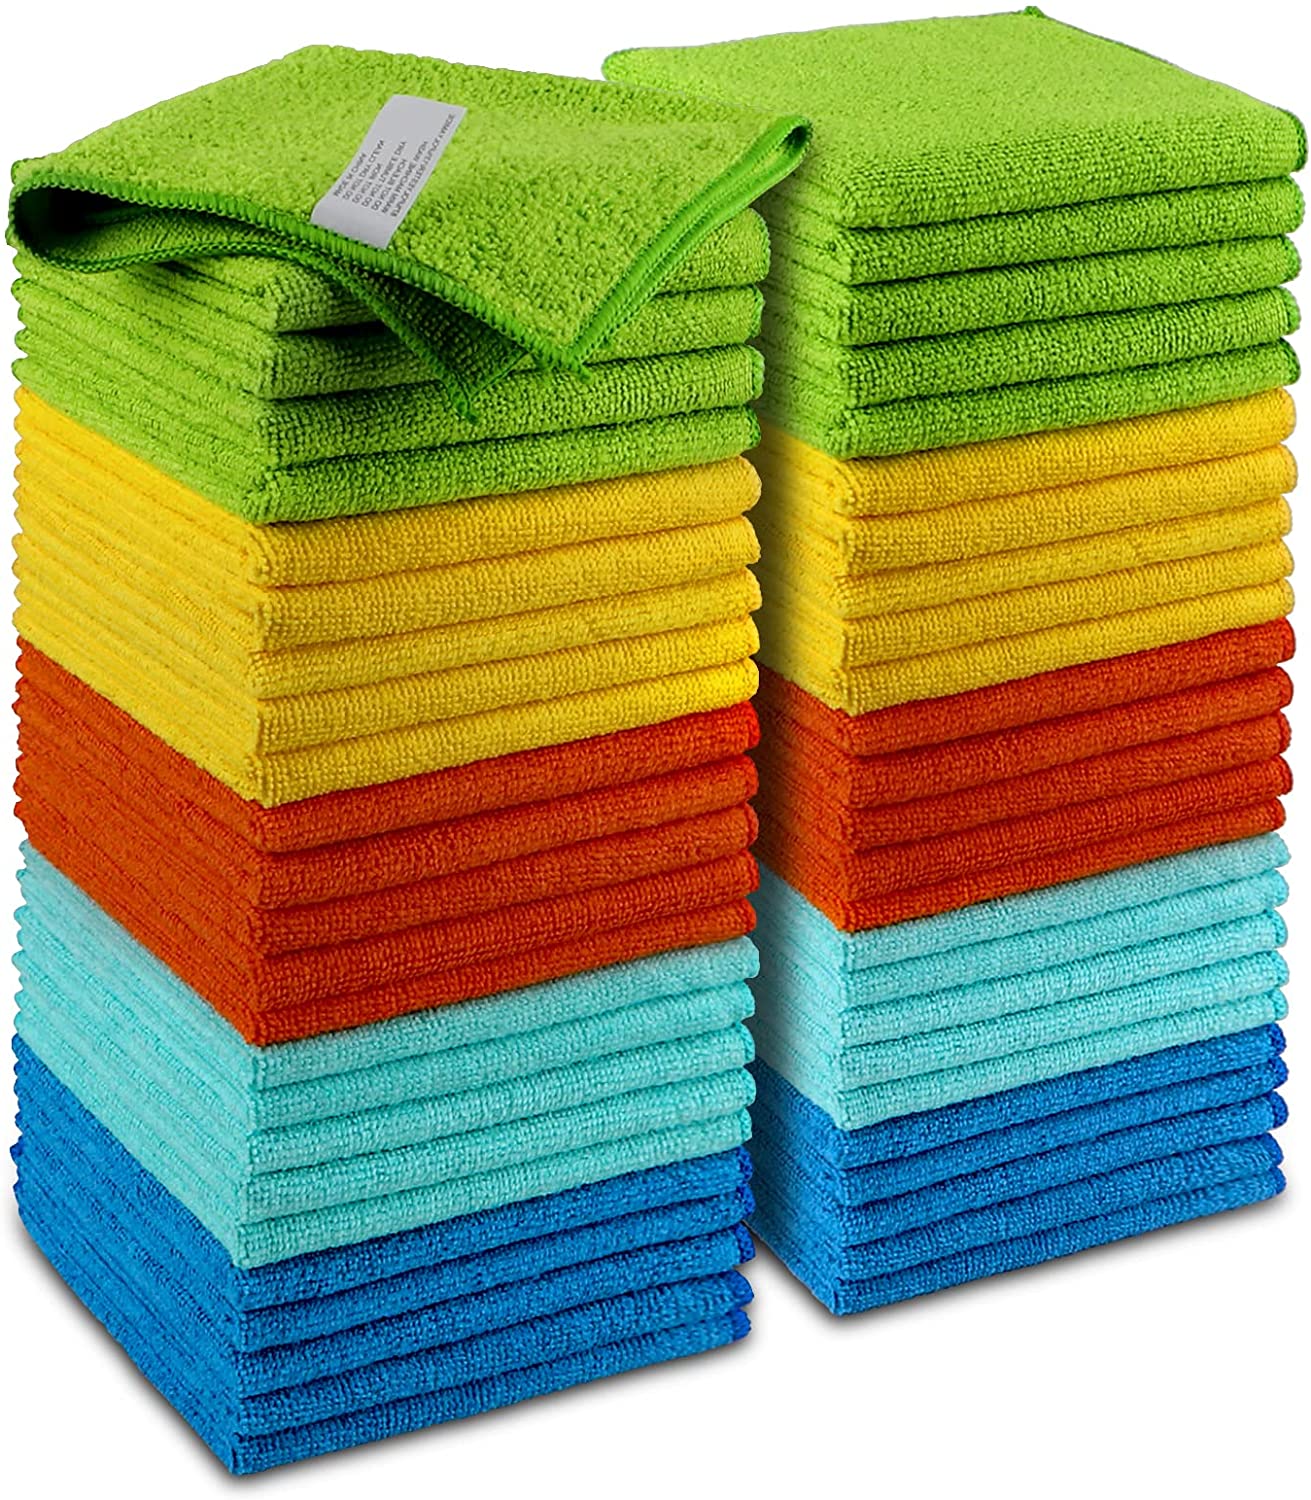 Vikan Microfibre Cloths High Quality Green Microfiber Towels Cleaning Cloth x 5 